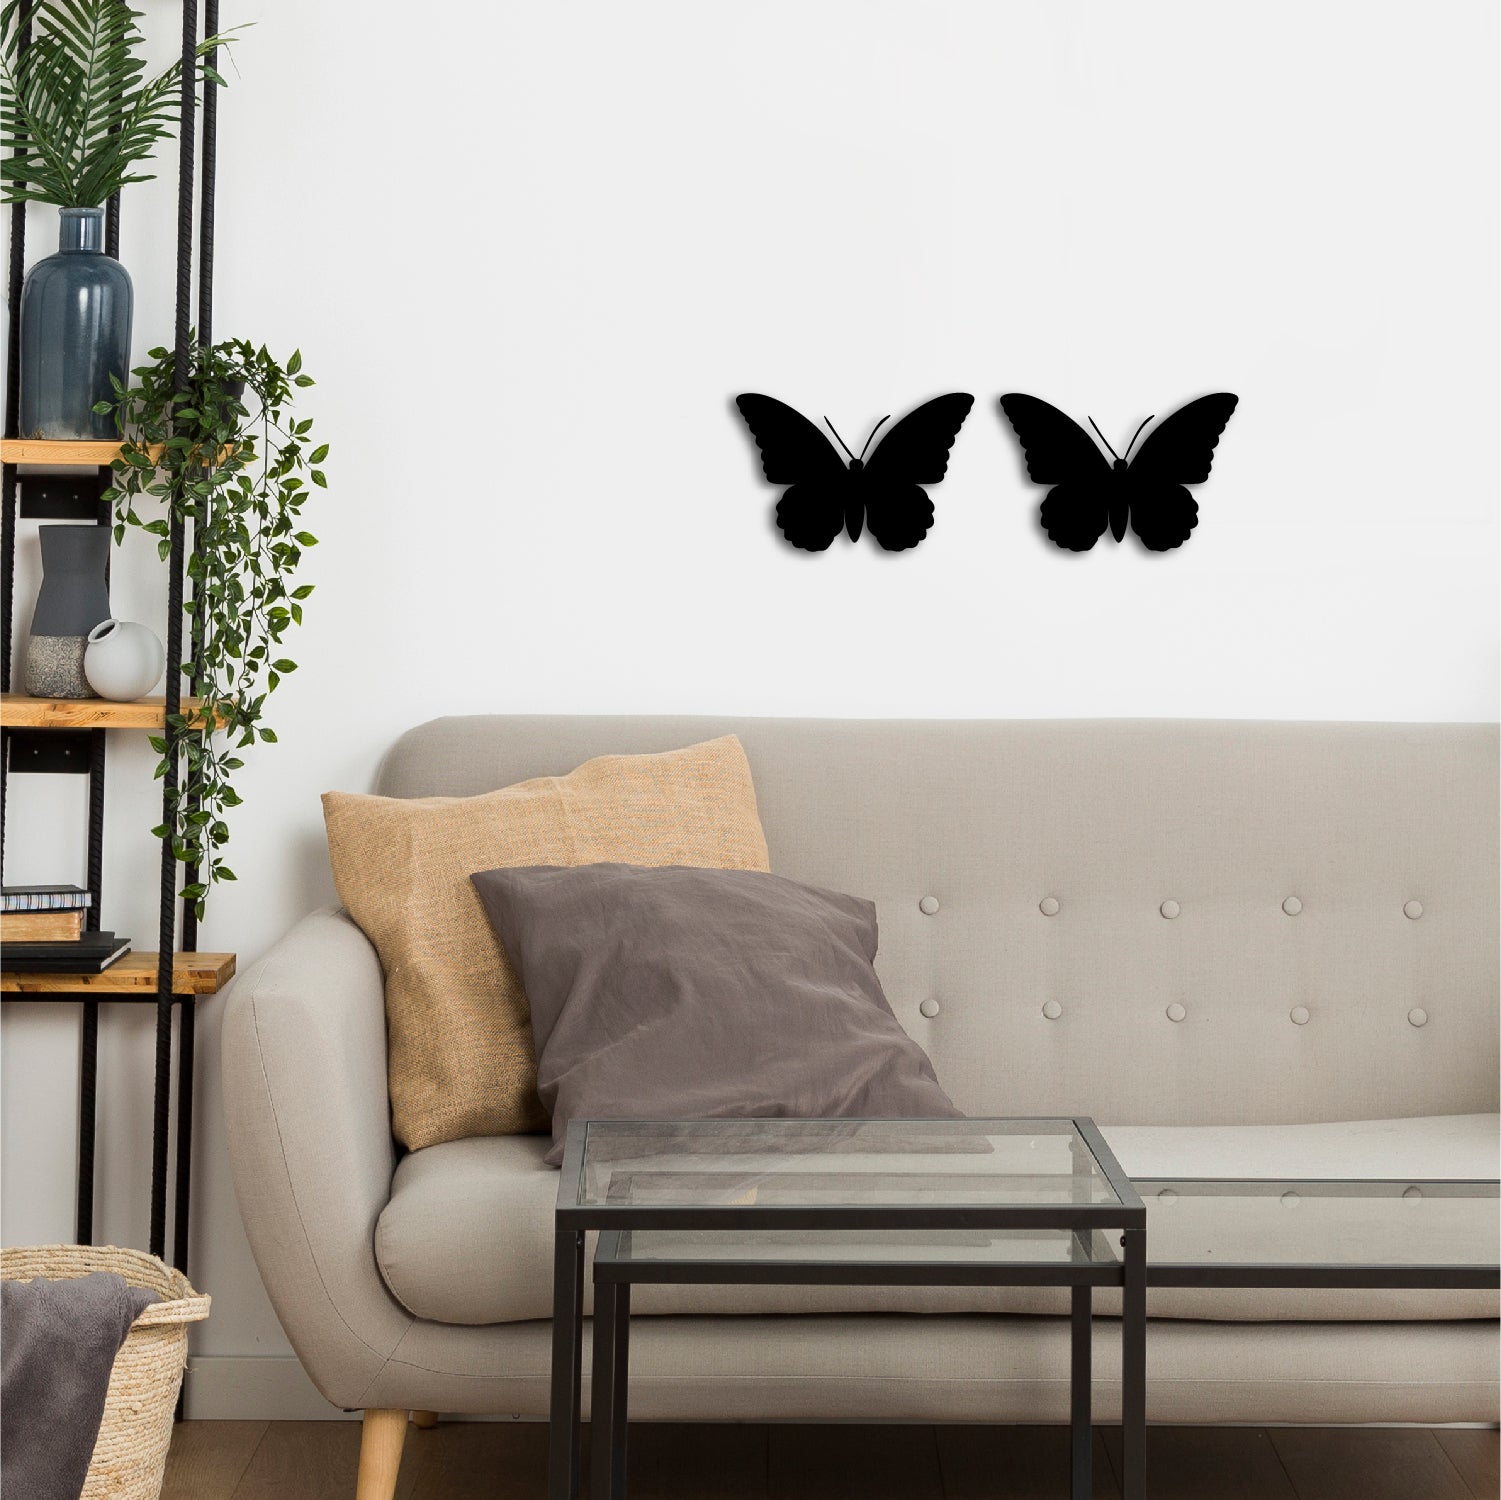 Set of 2 "Butterflies" Black Engineered Wood Wall Art Cutout, Ready to Hang Home Decor 4